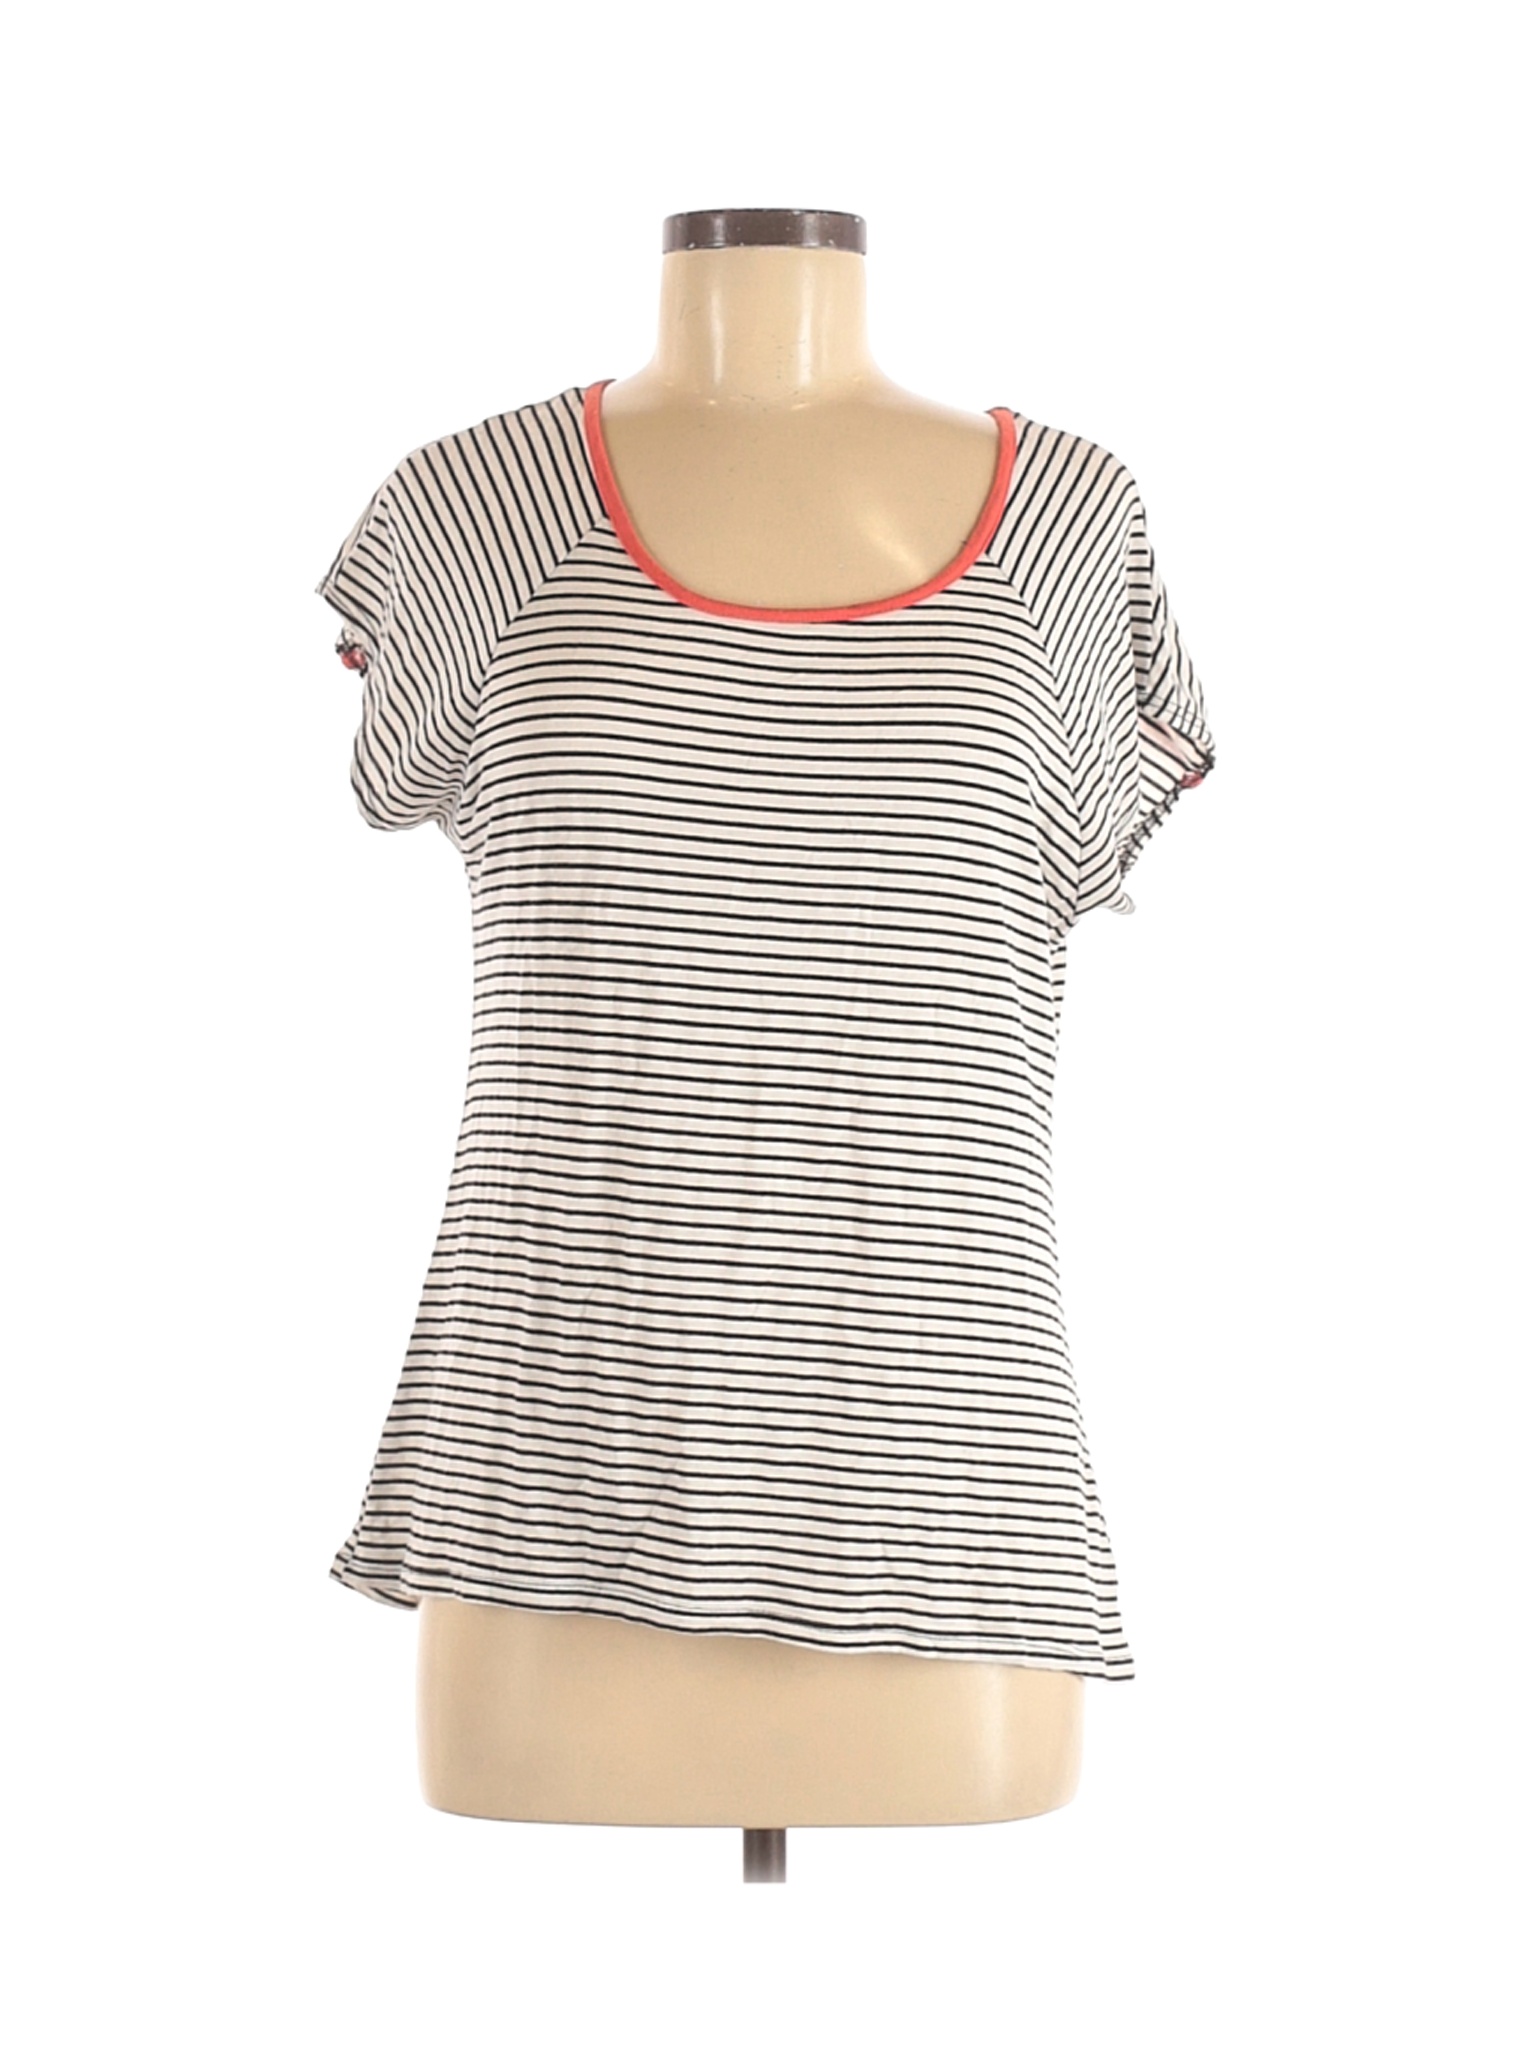 Unbranded Women Ivory Short Sleeve T-Shirt L | eBay